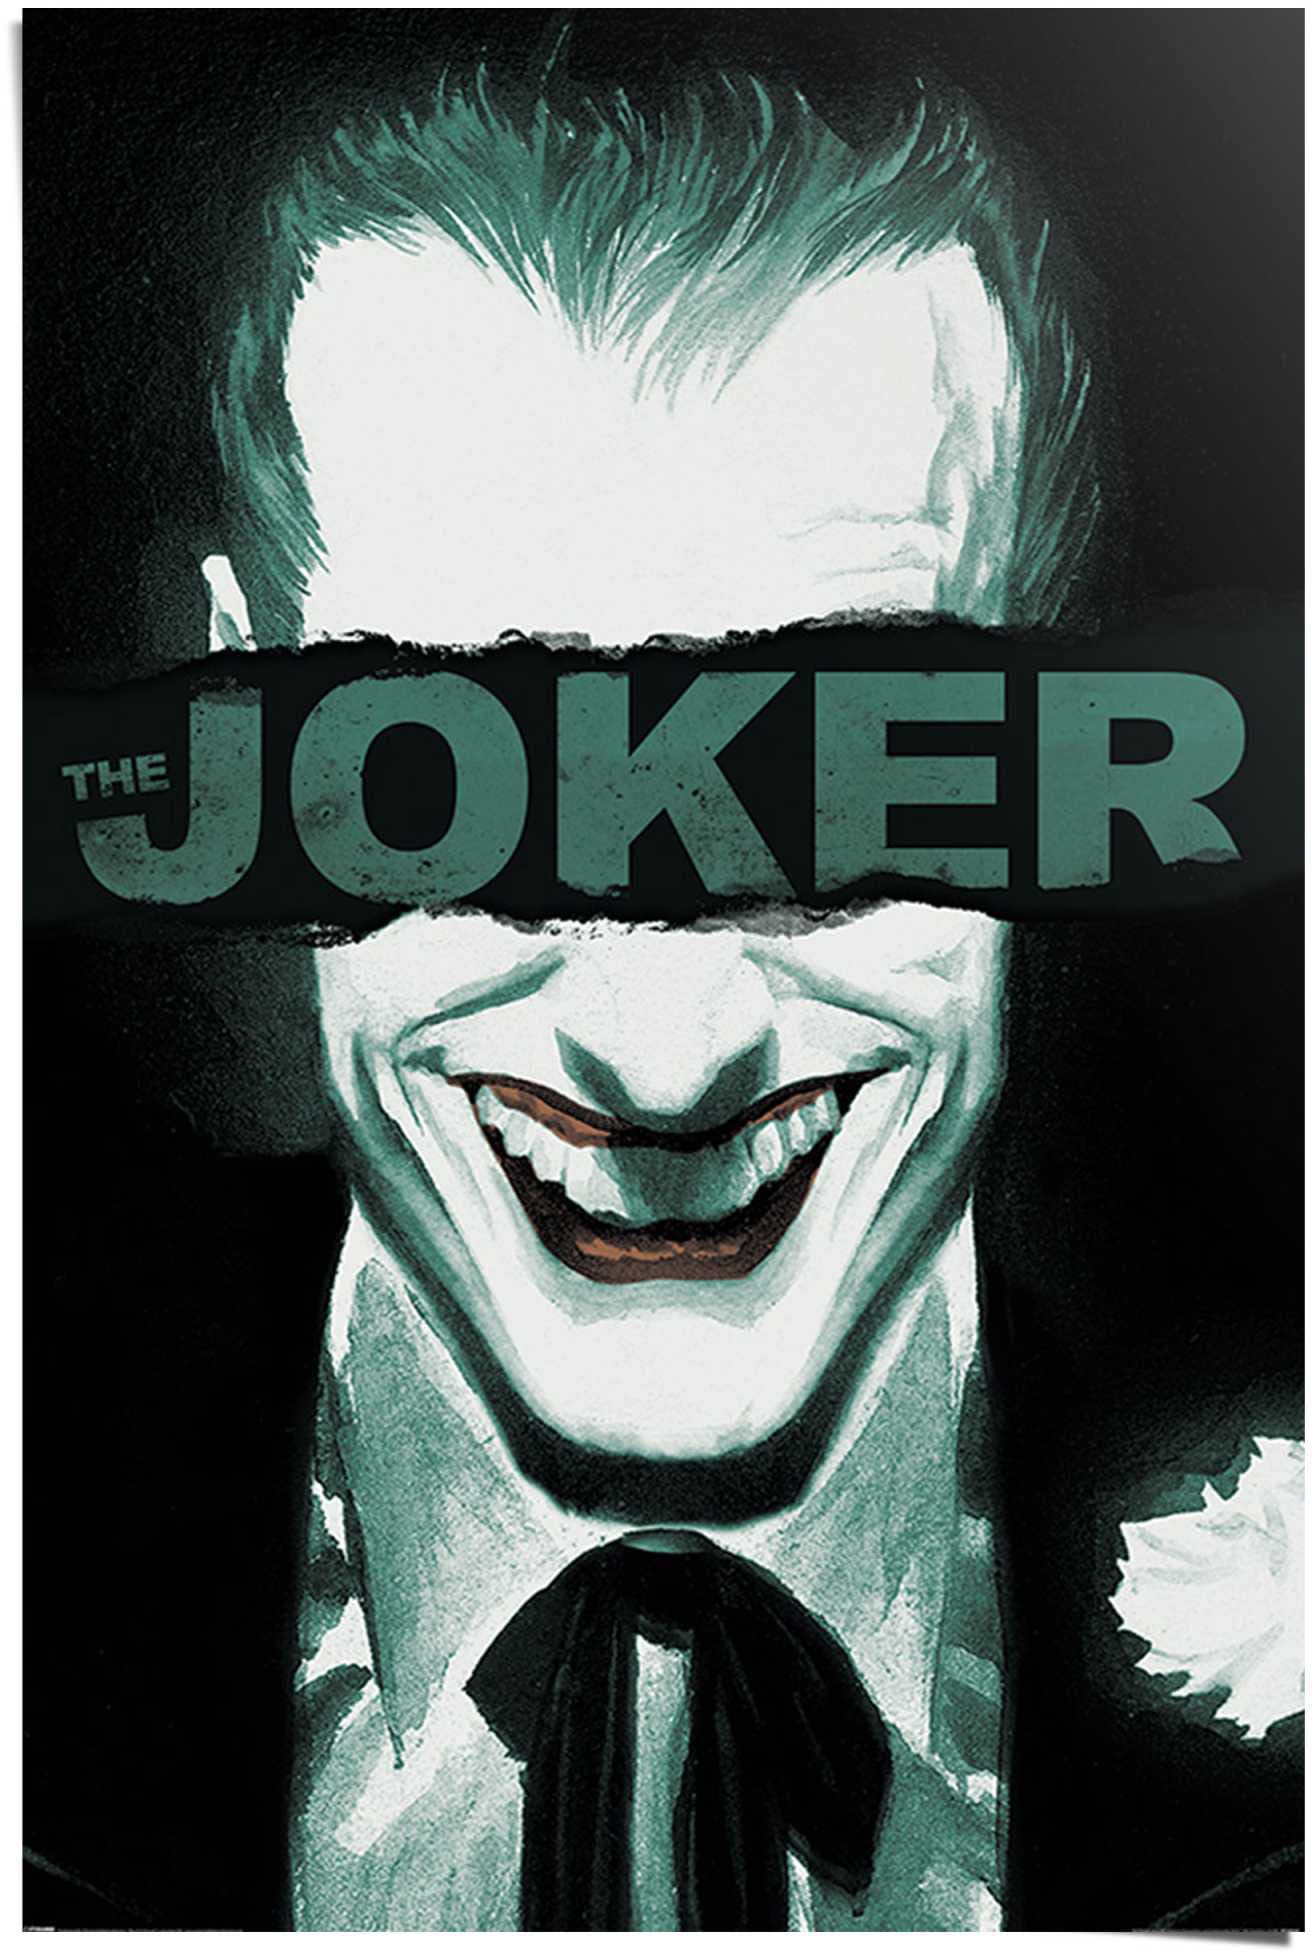 Reinders! Poster (1 a Film«, Put BAUR - face happy Joker St.) on »The bestellen 